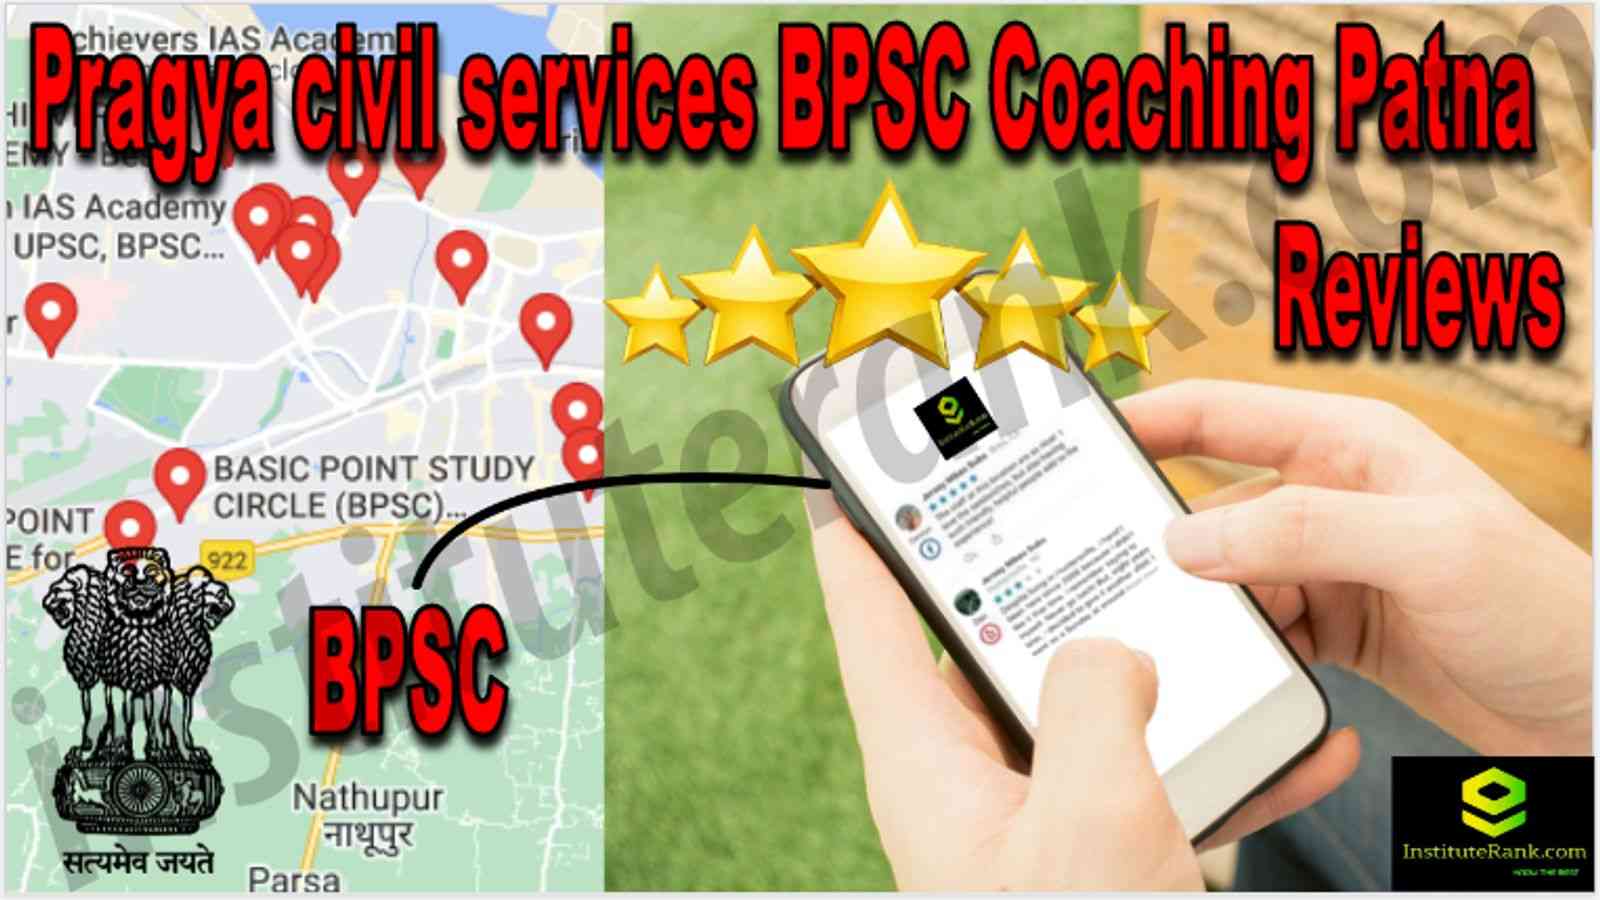 Pragya civil services BPSC Coaching Patna